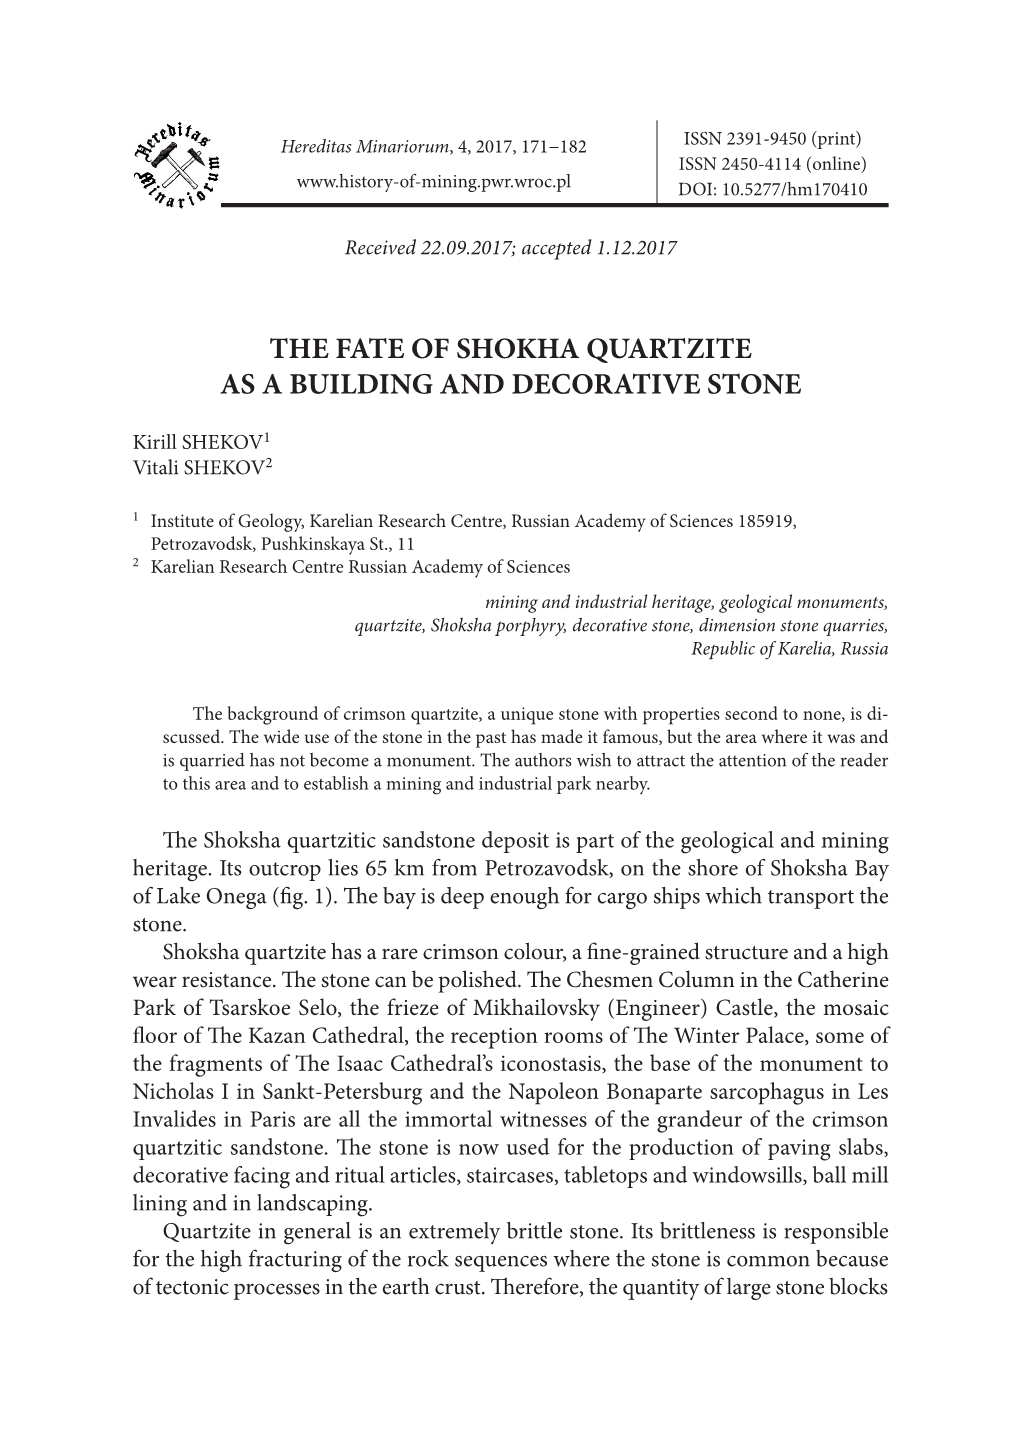 The Fate of Shokha Quartzite As a Building and Decorative Stone